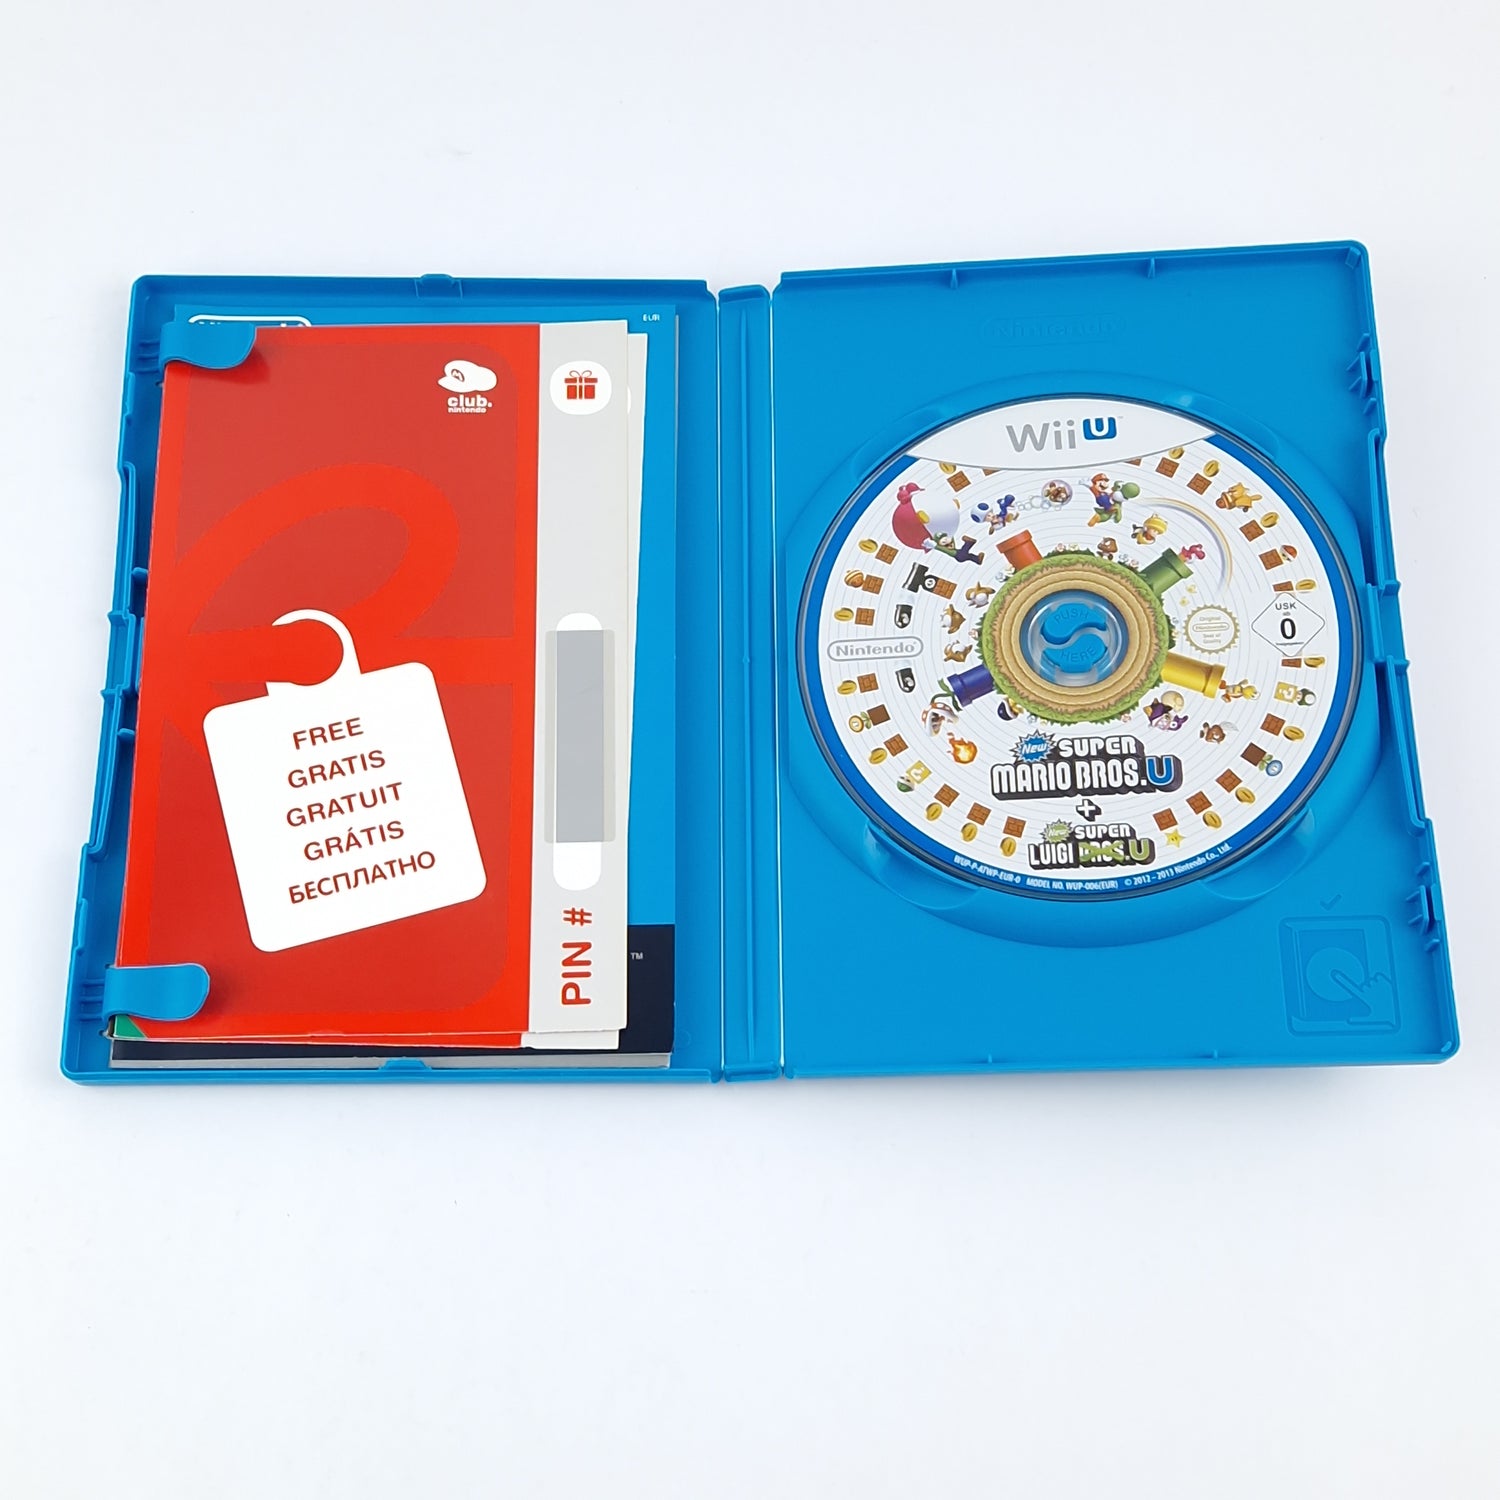 Nintendo Wii U Game: New Super Mario Bros. U - OVP Instructions CD | PAL version